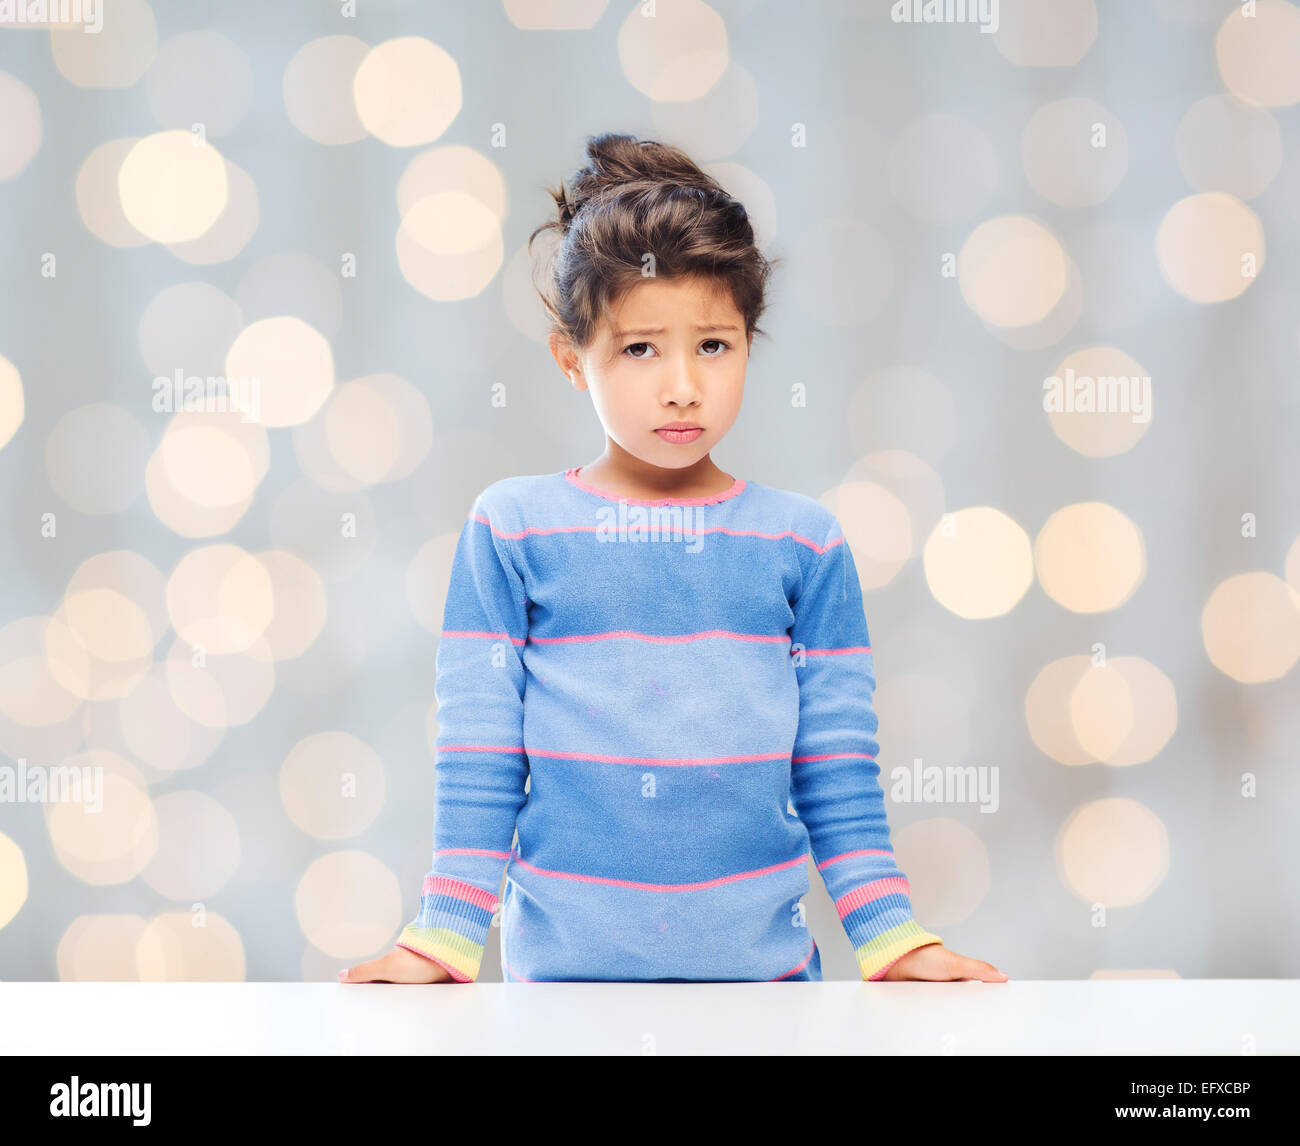 sad little girl over city background Stock Photo